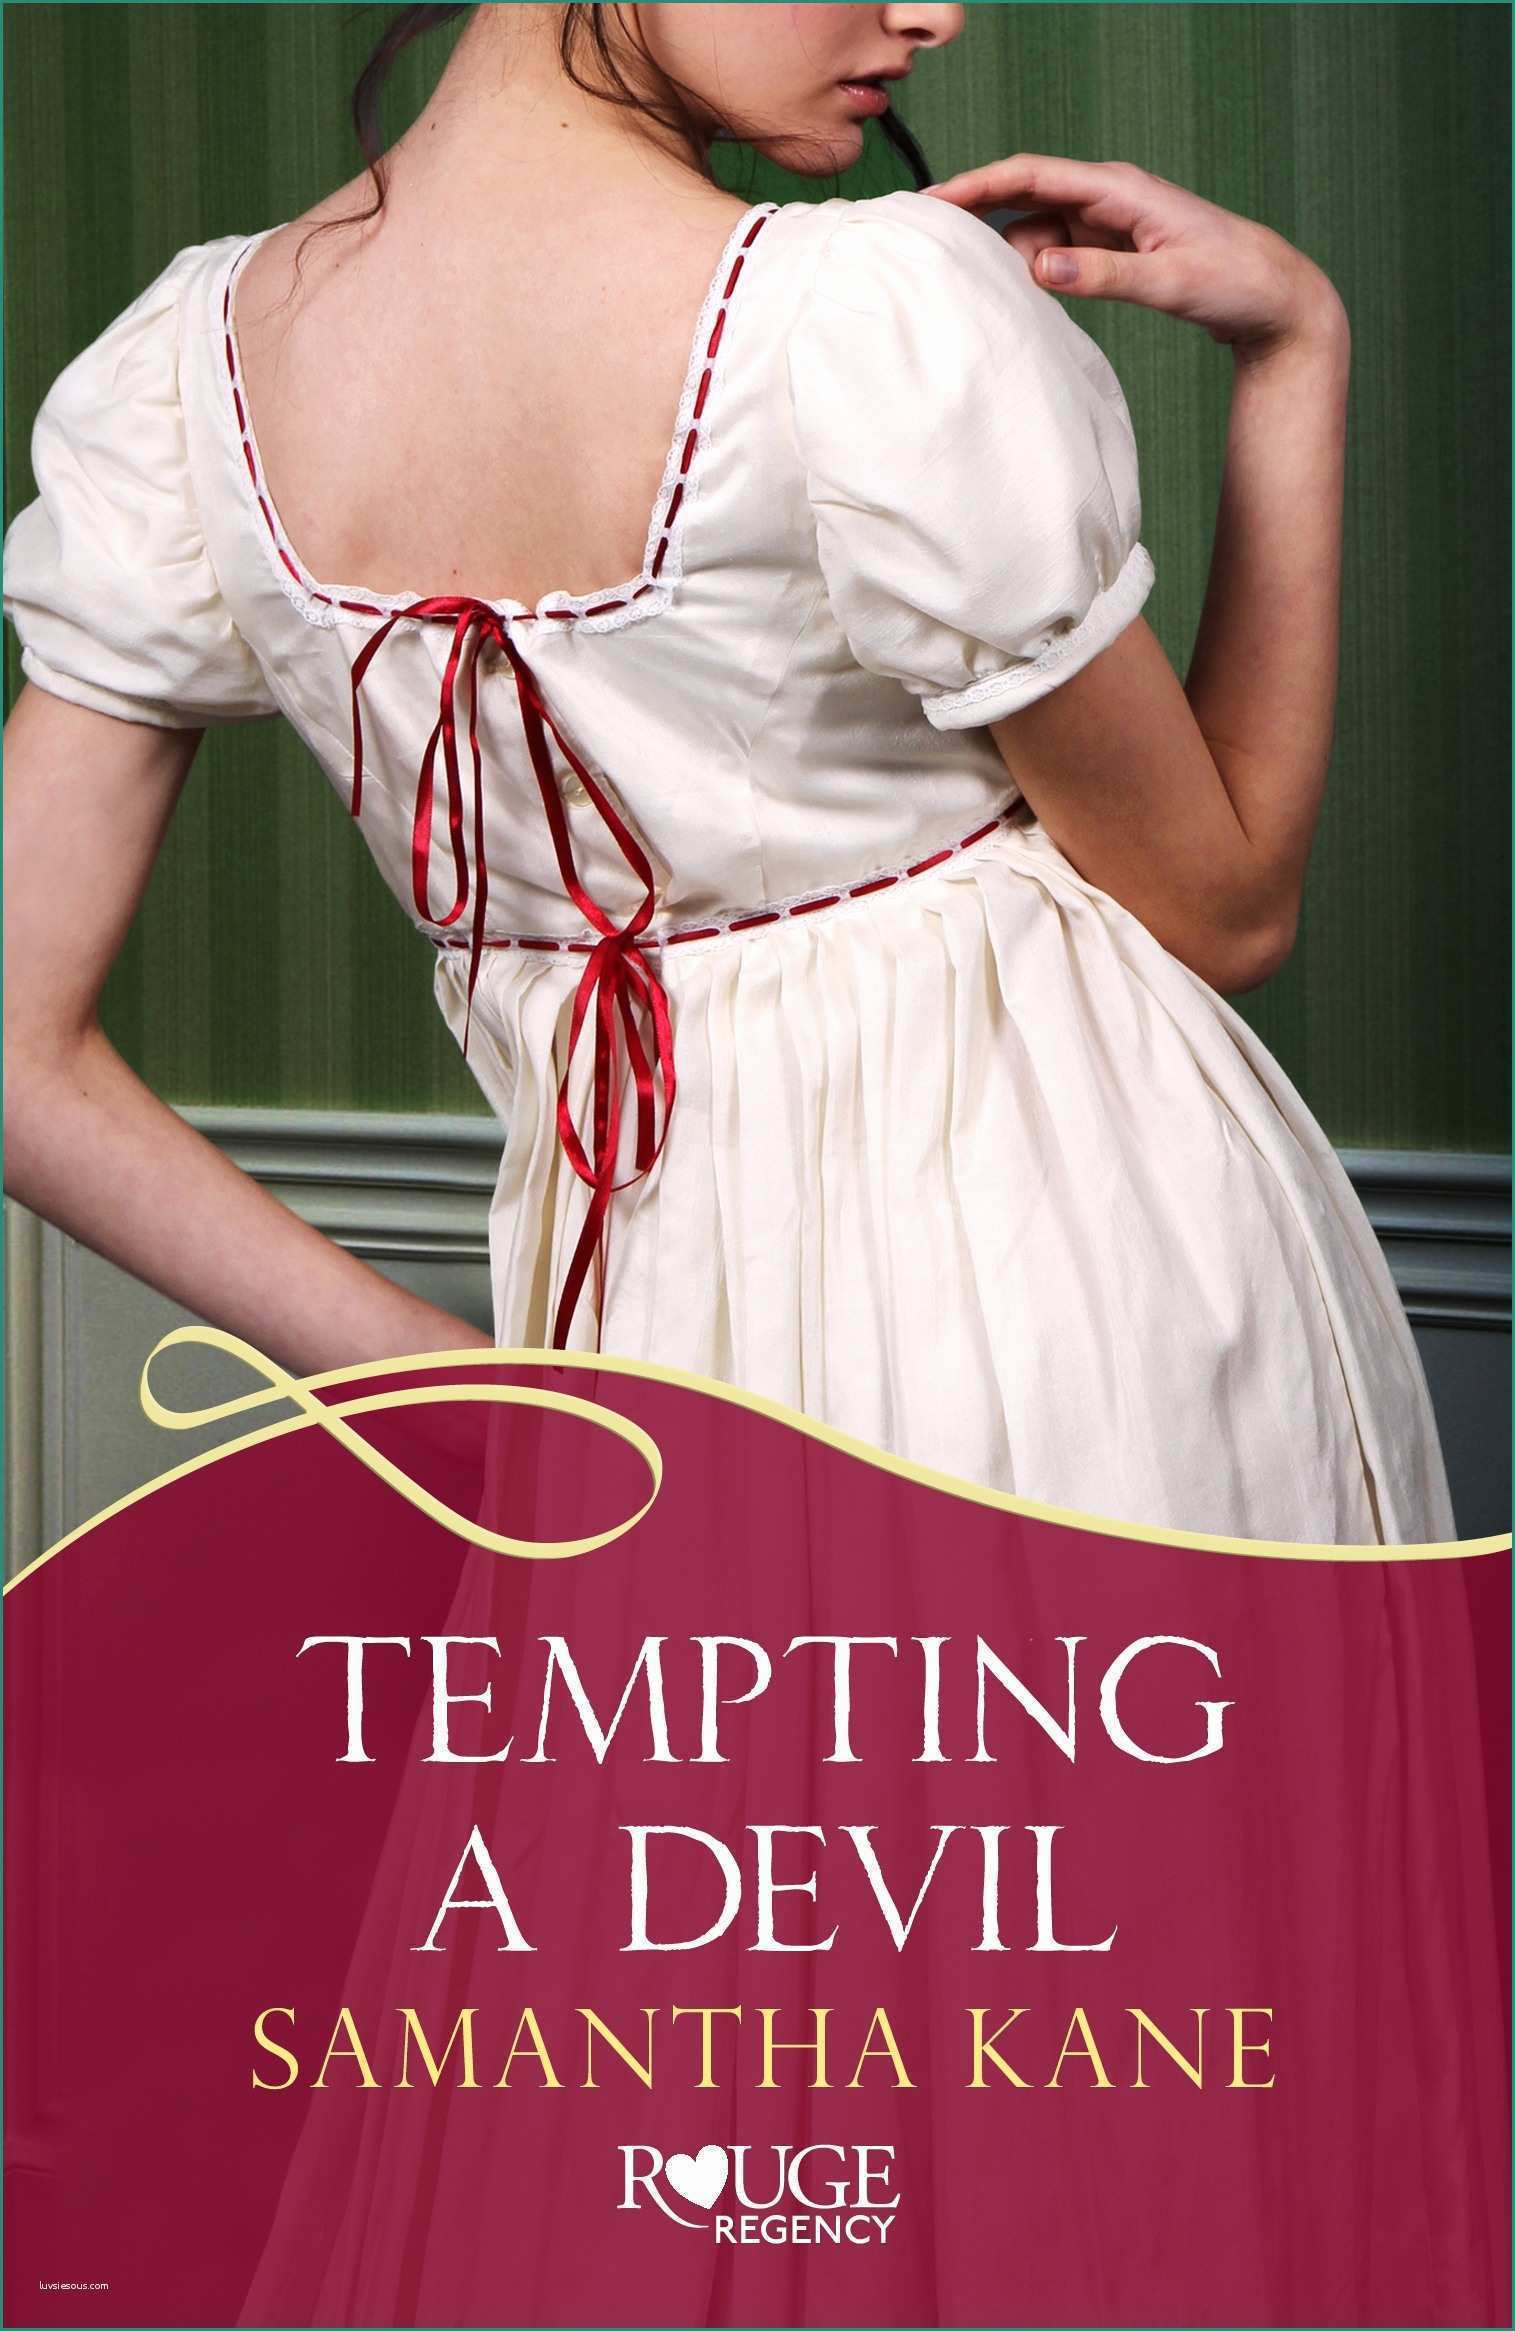 Grigliato Carrabile Leroy Merlin E Tempting A Devil by Samantha Kane Penguinrandomhouse